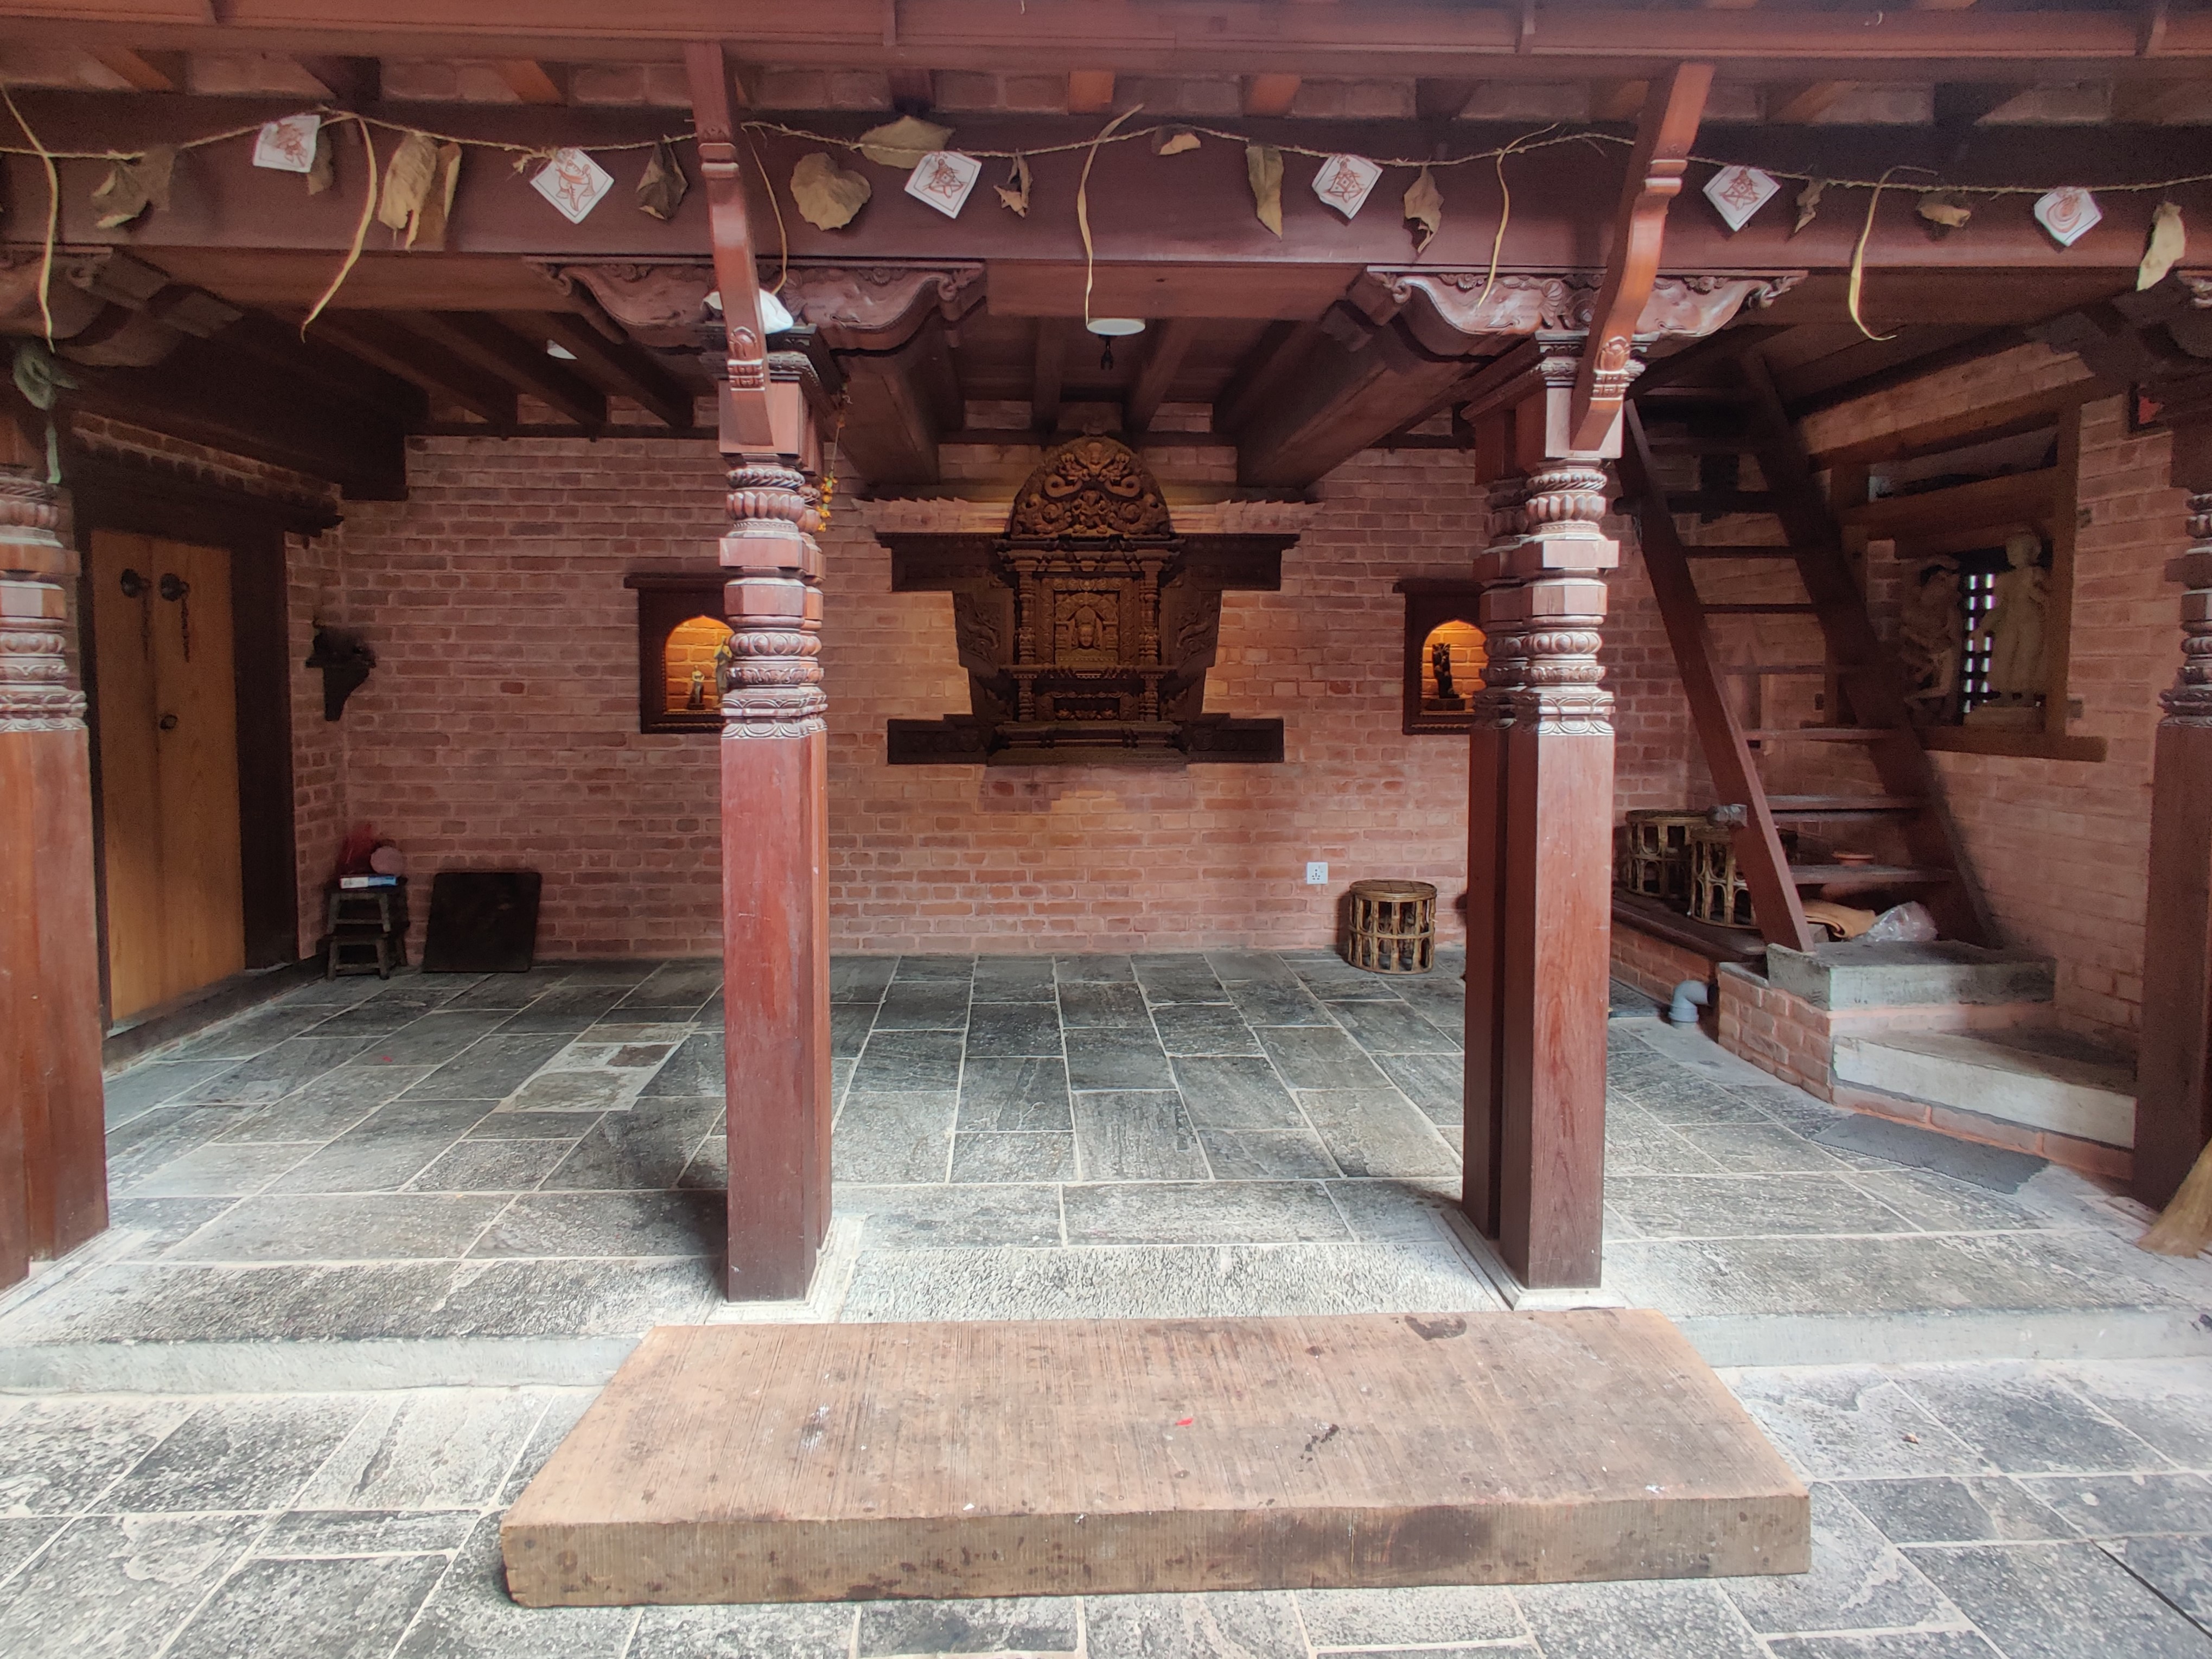 Interiors of Sikami Chhen. Photo: Nasana Bajracharya